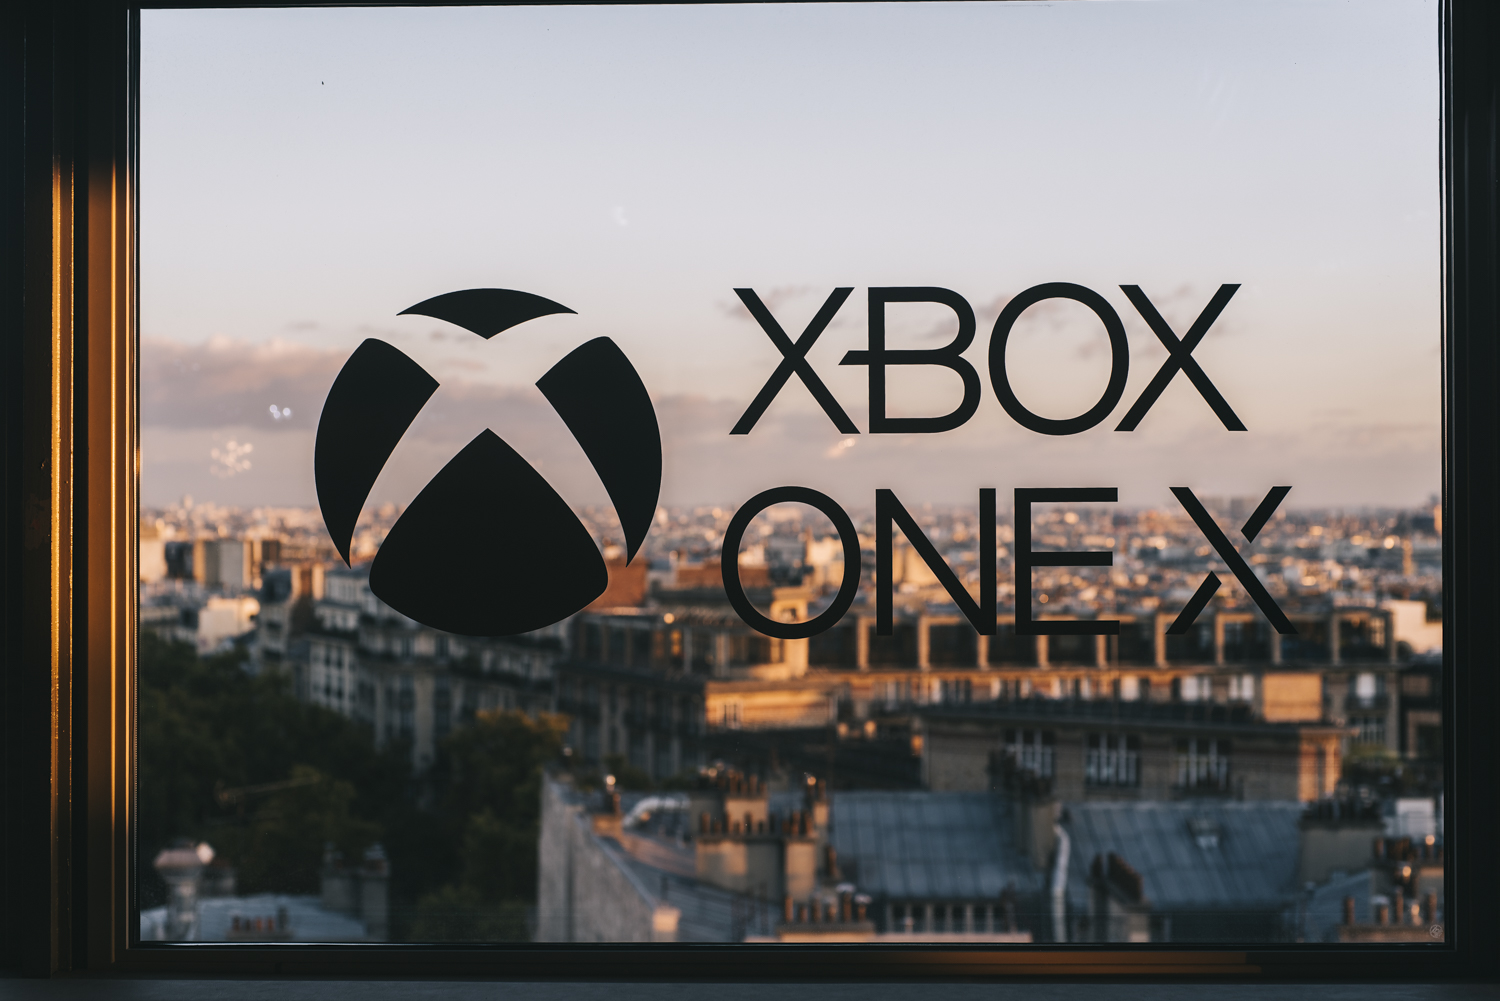 Lancement Xbox One X fnac la clef prod